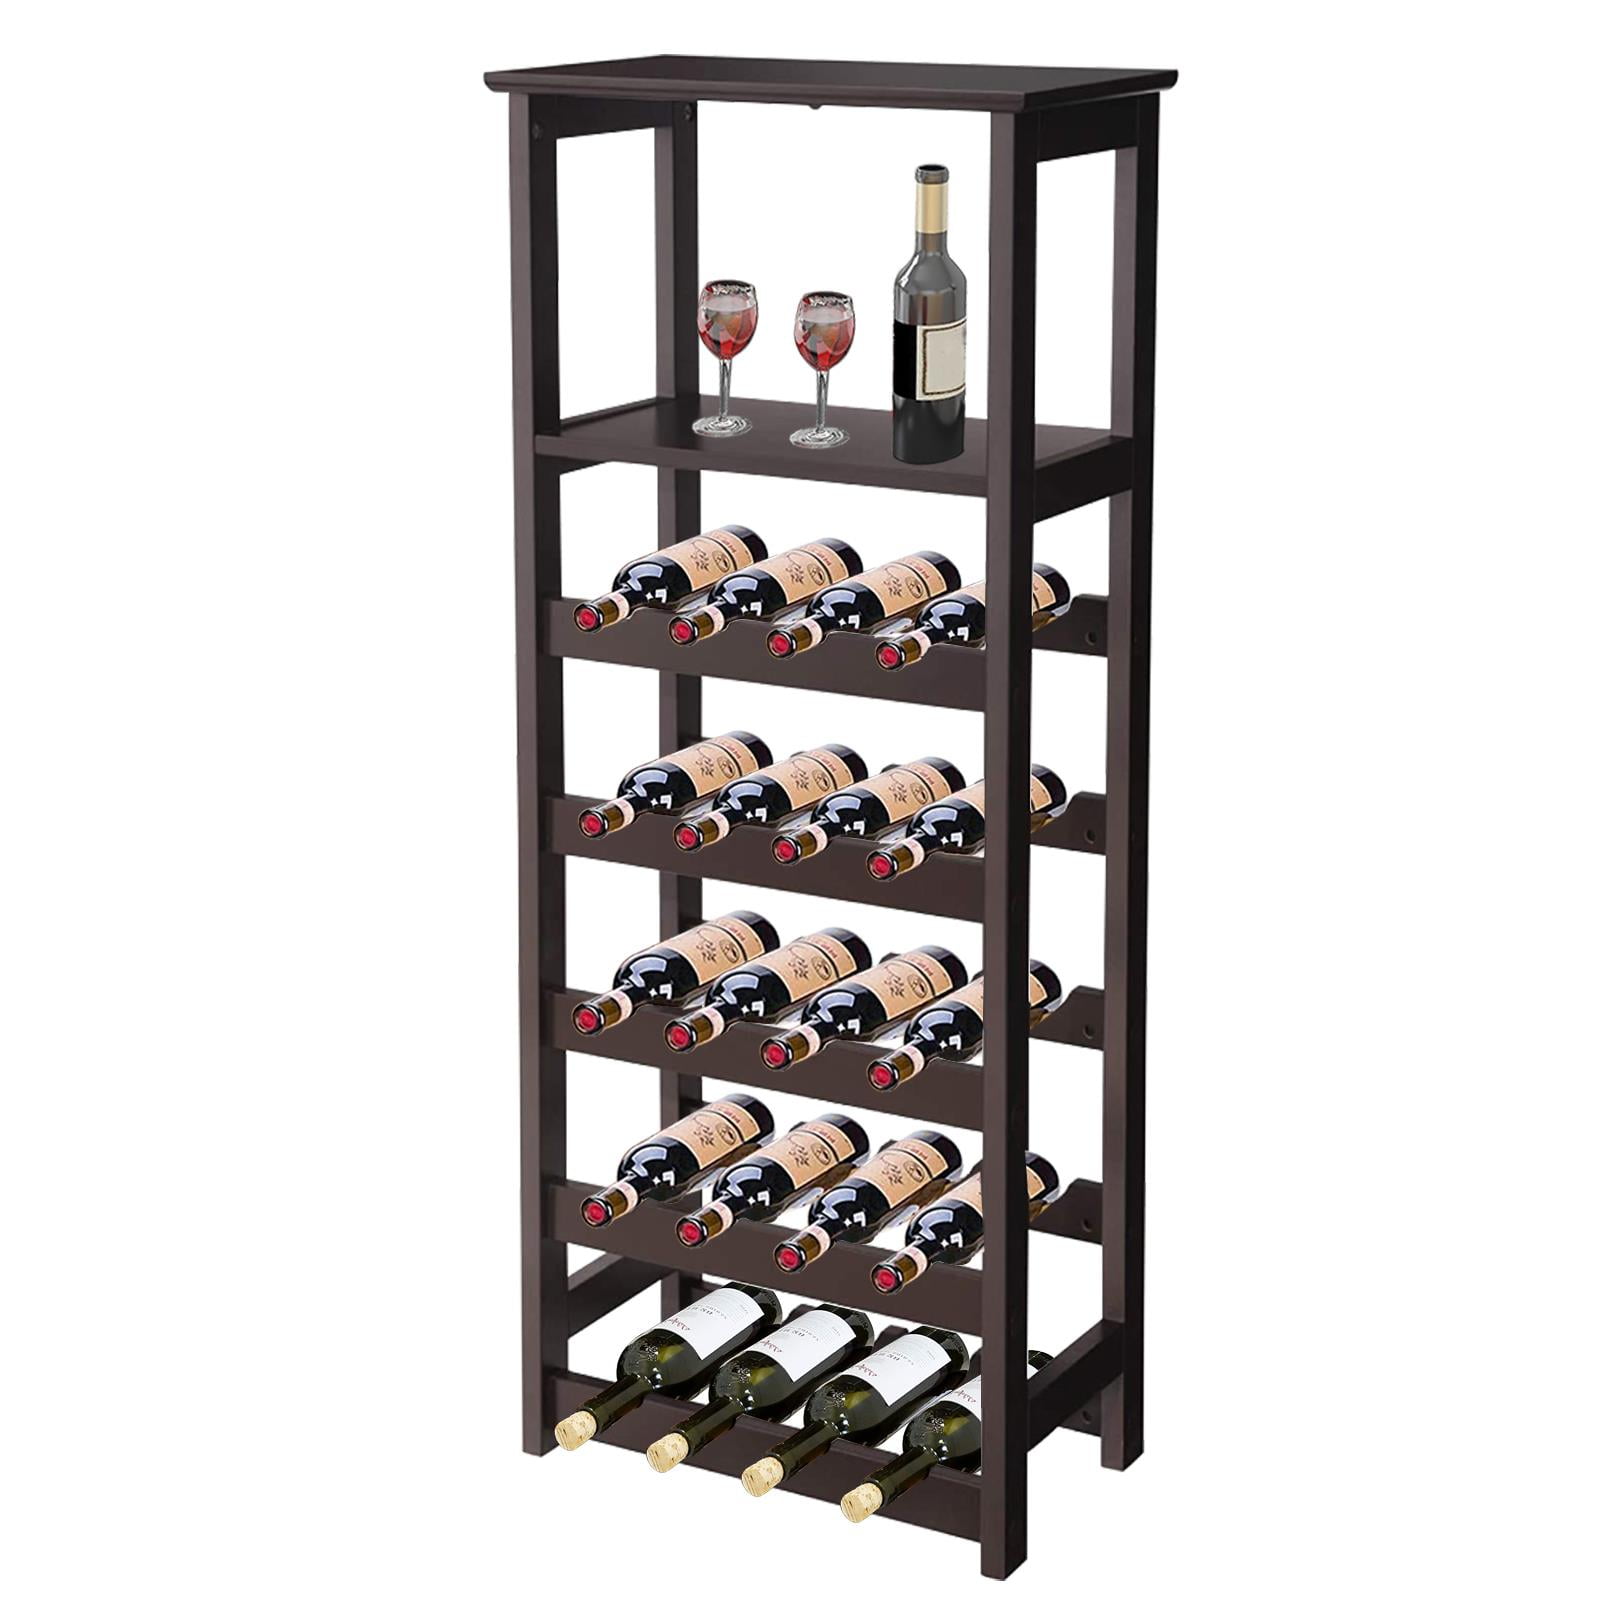 Display Cabinet for Home Kitchen Bar Garden Cellar Brown Wine Rack Organizer with 4-Tier 16 Bottles Wine Racks Free Standing